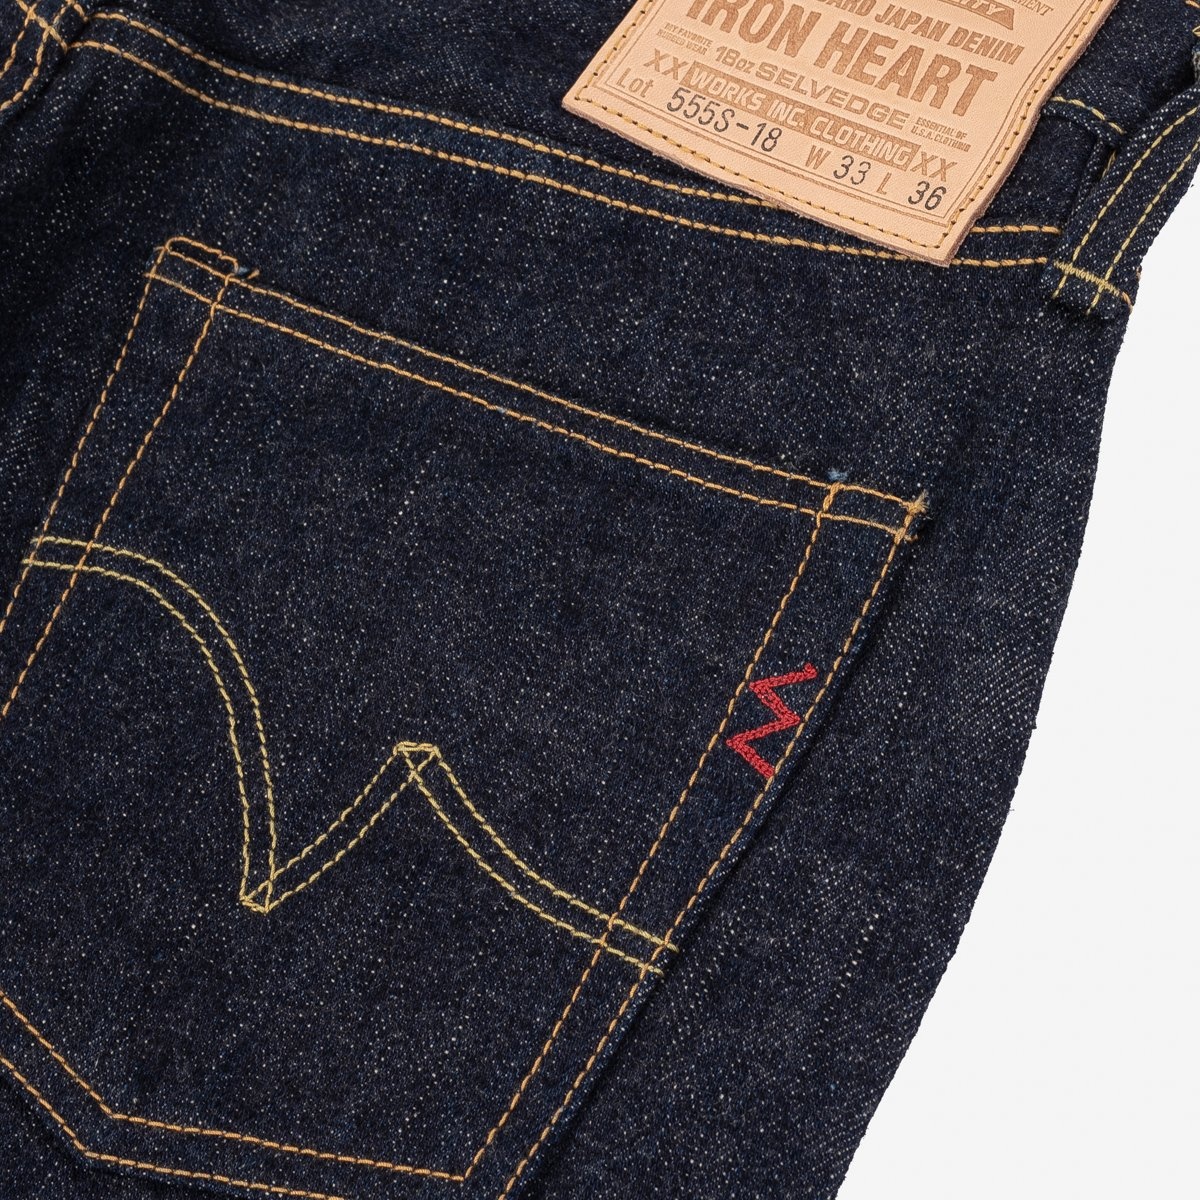 IH-555S-18 18oz Vintage Selvedge Denim Super Slim Cut Jeans - Indigo - 11